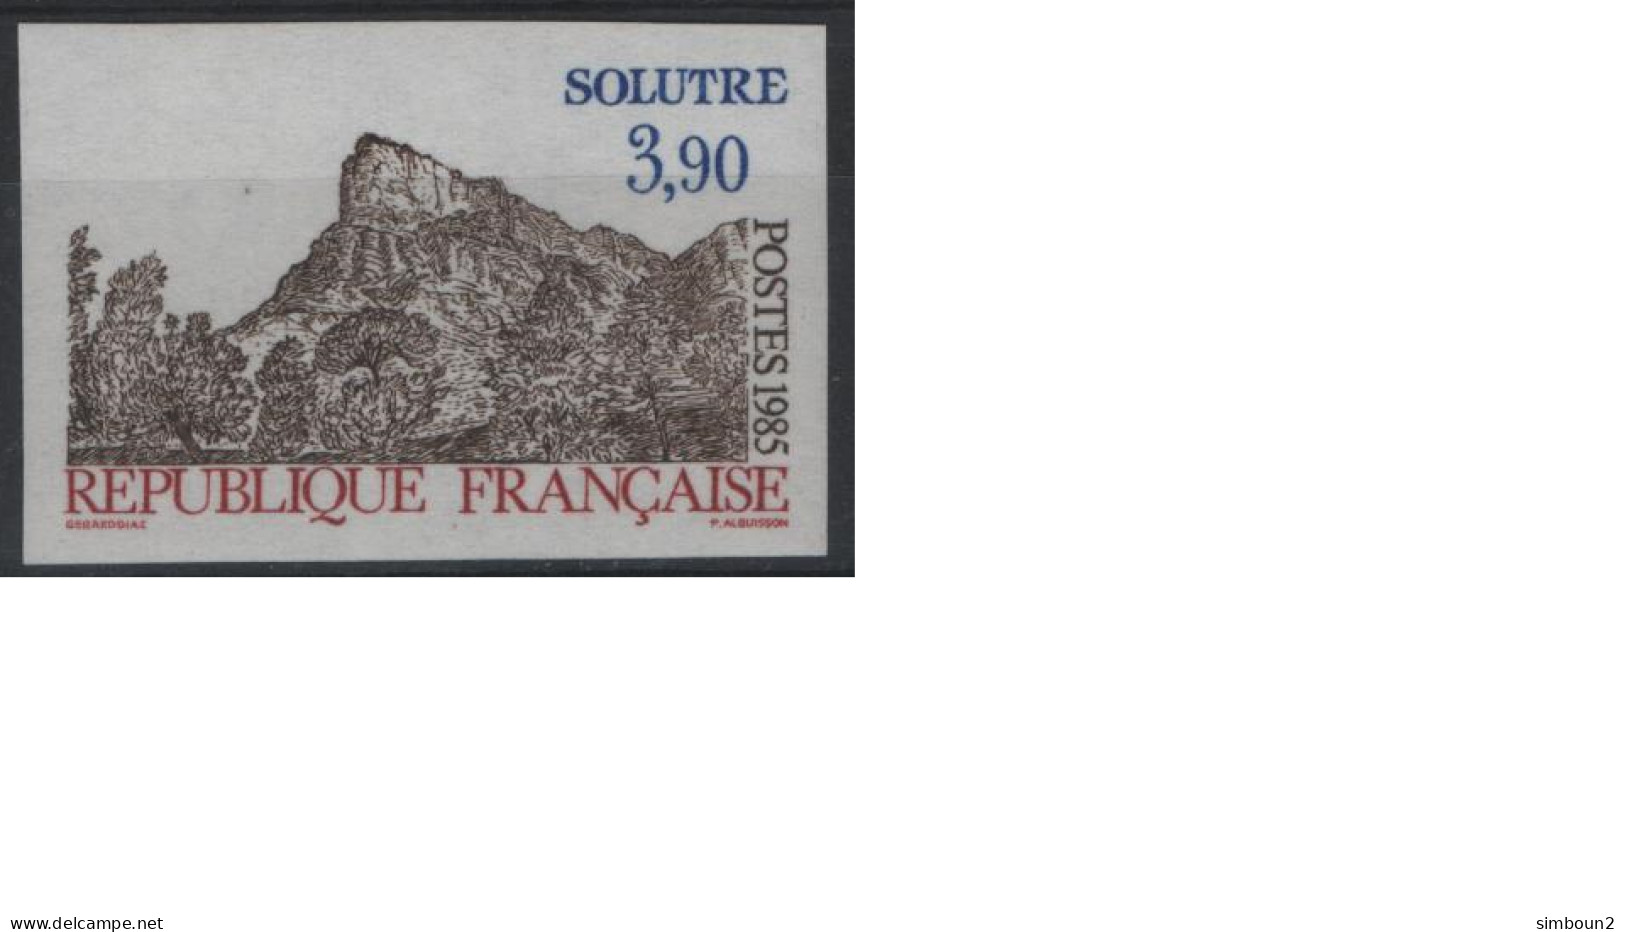 France 1985 N°2388** Non Dentele Imperf Mint Never Hinged - 1981-1990